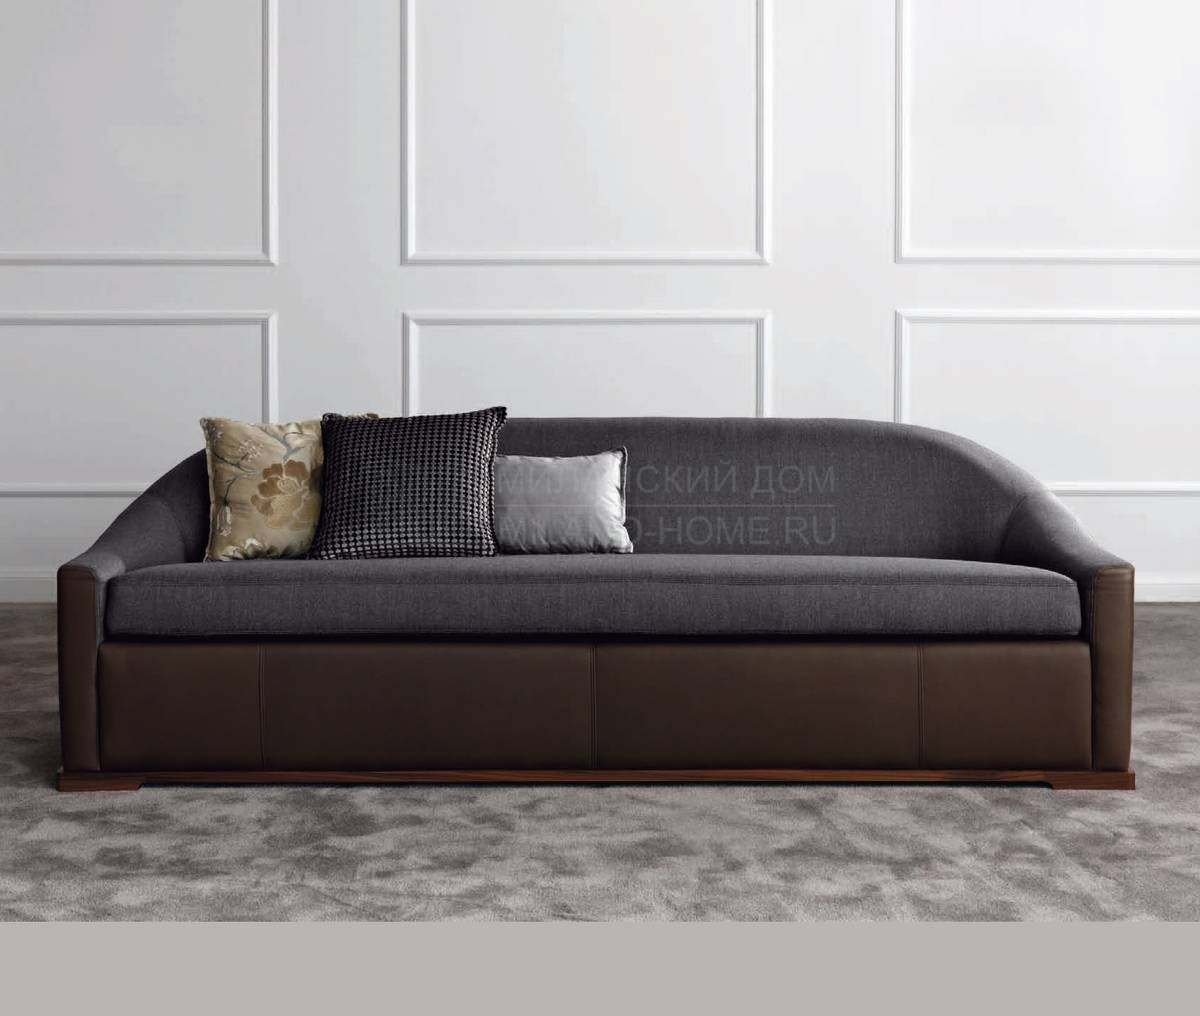 Прямой диван Romeo из Италии фабрики GALIMBERTI NINO